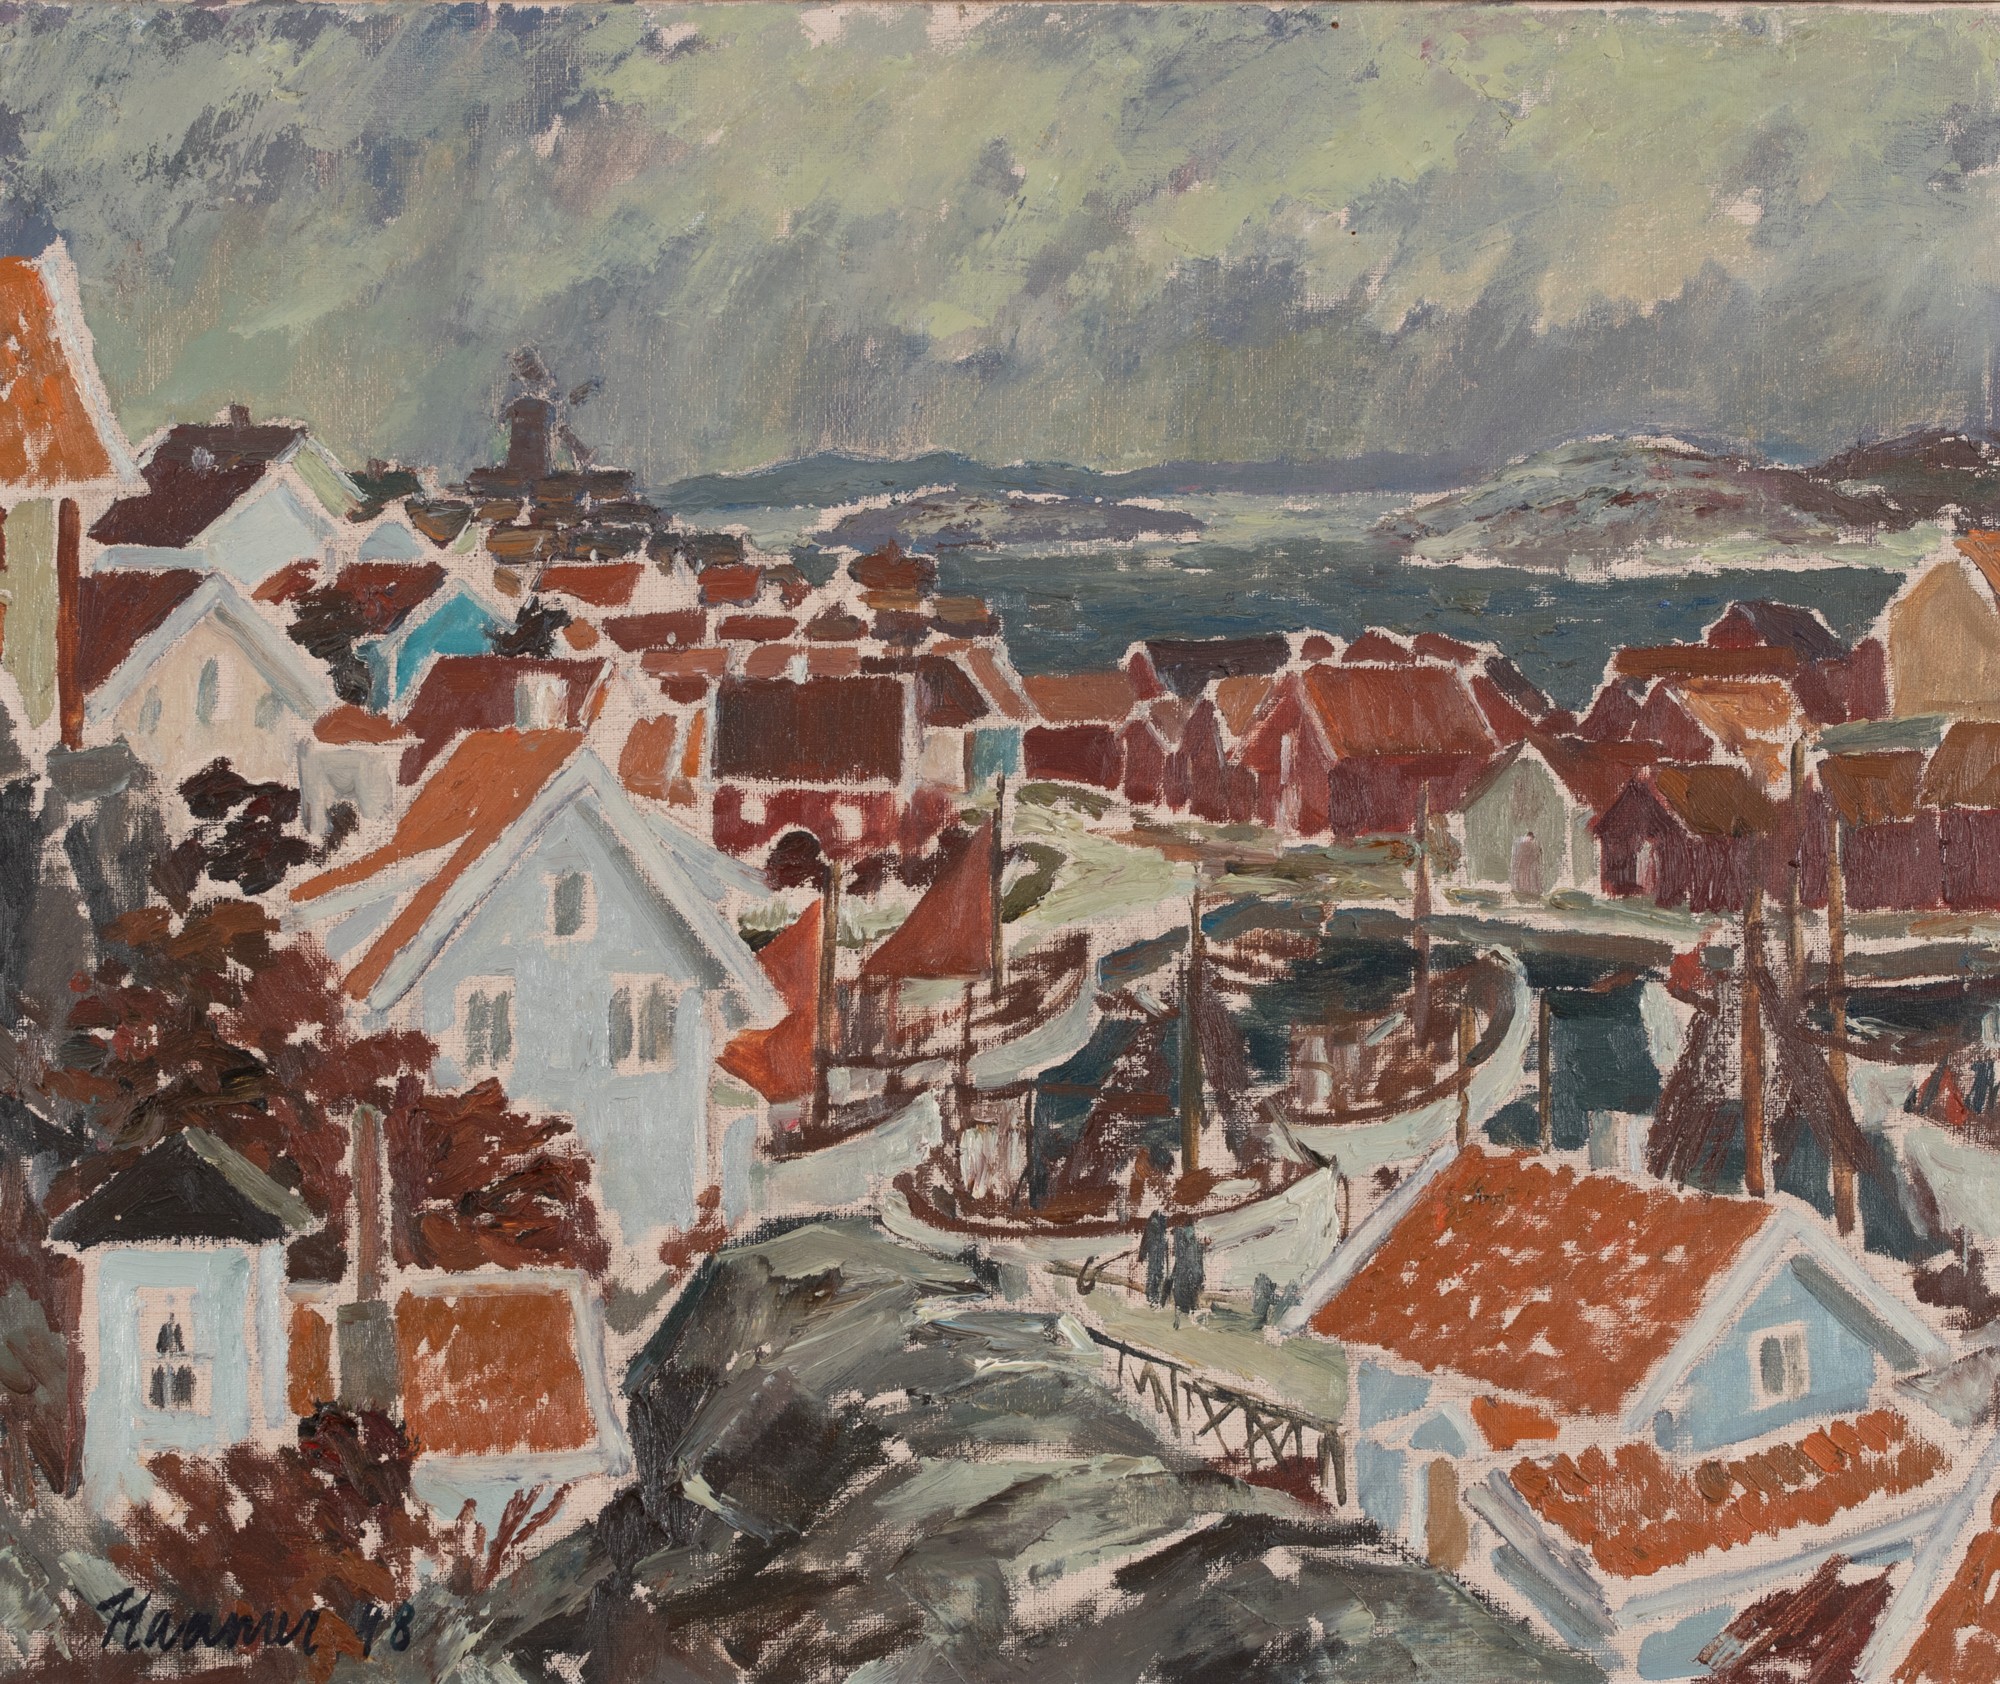 Eerik Haamer "Fishing Port in Mollösund"